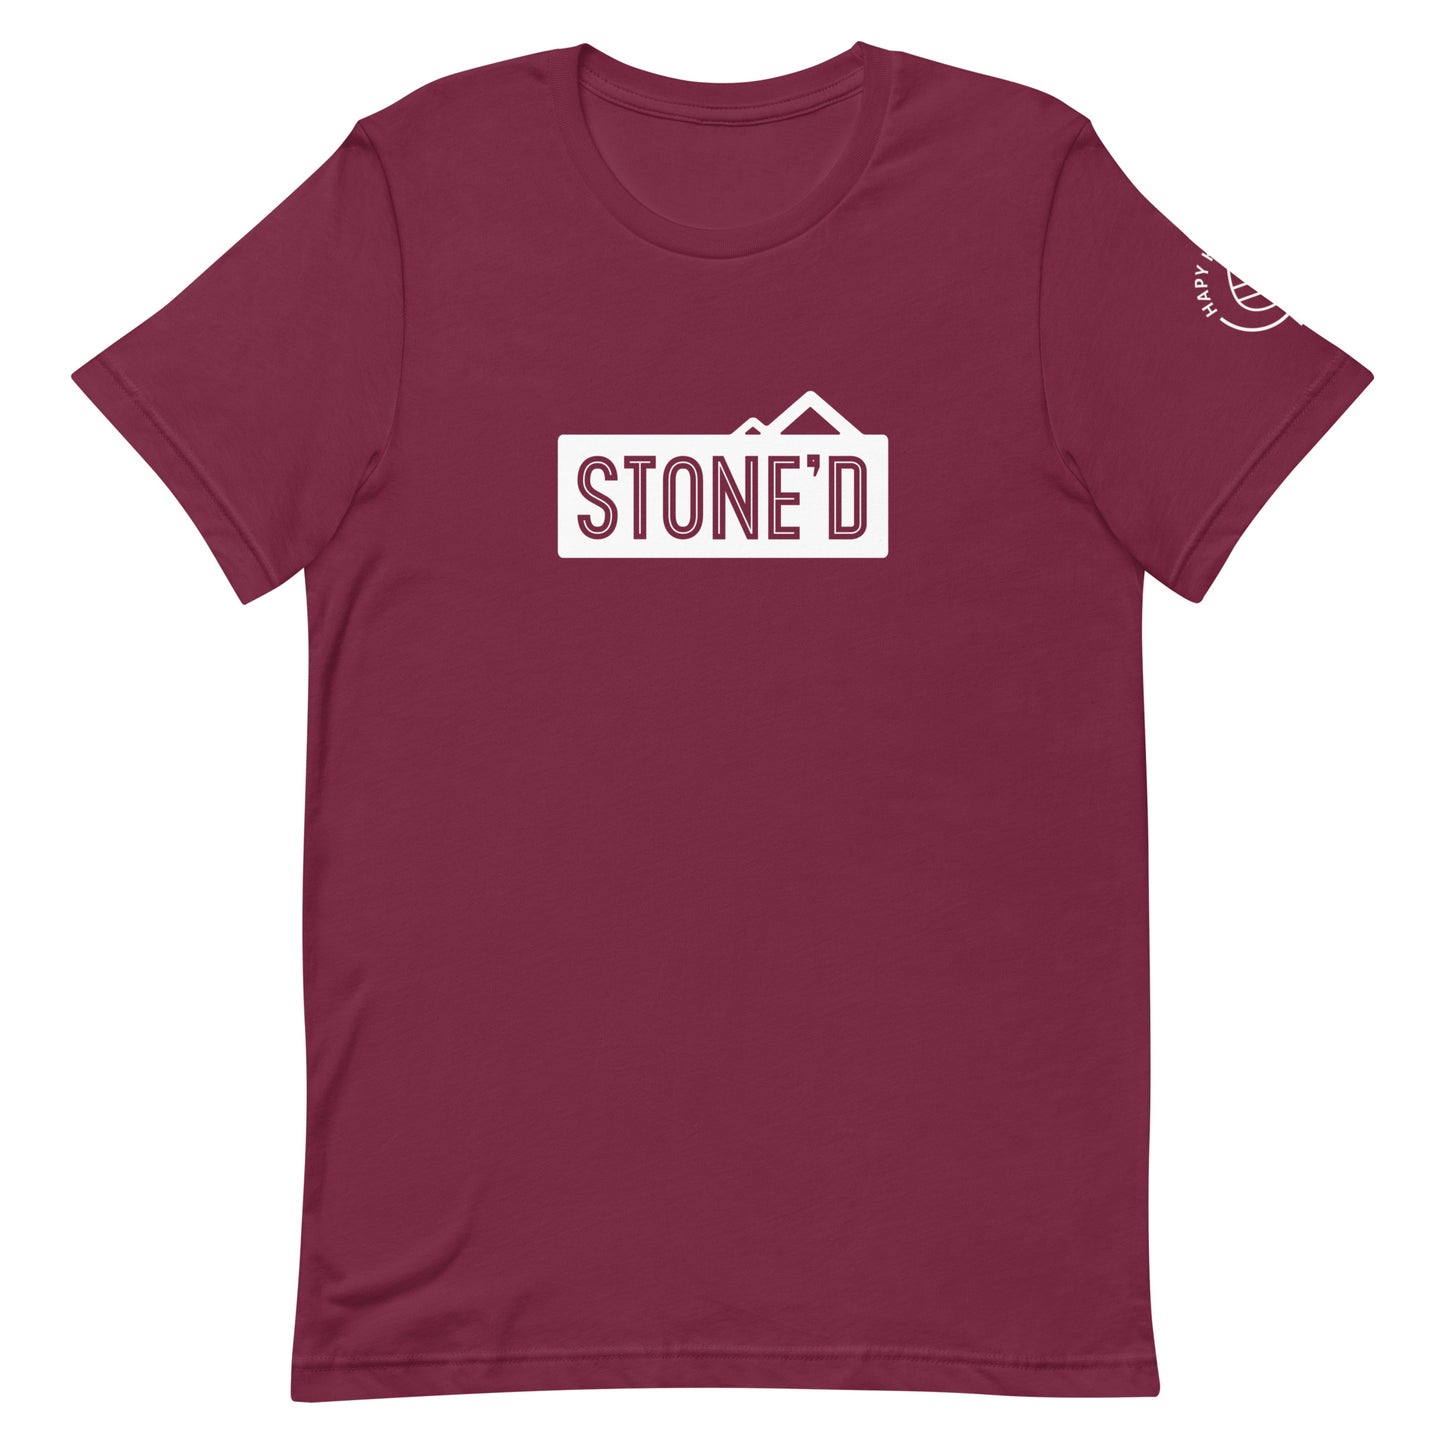 Stone'd t-shirt